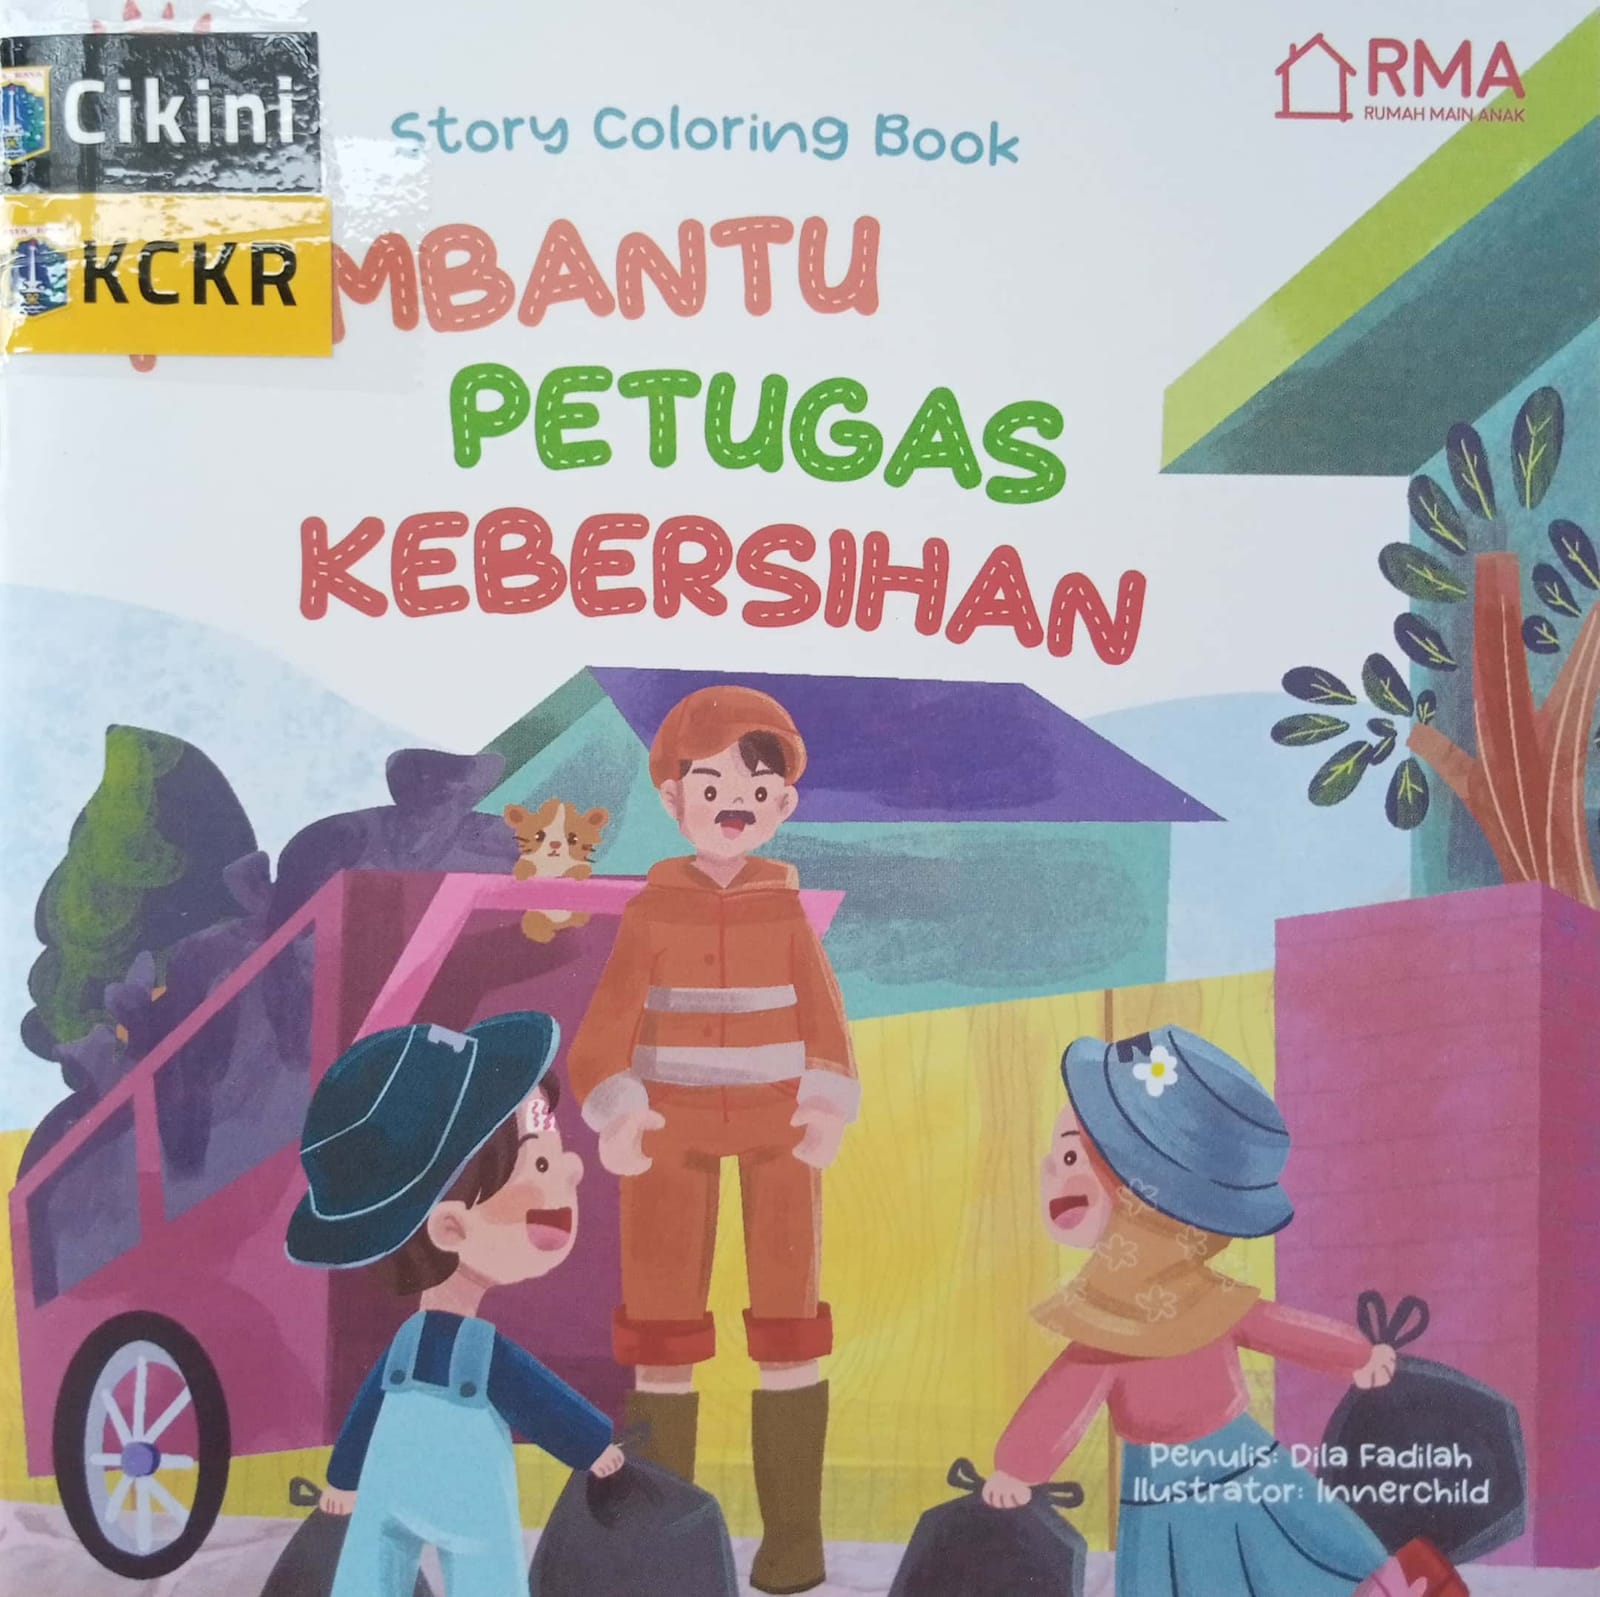 Story coloring book membantu petugas kebersihan